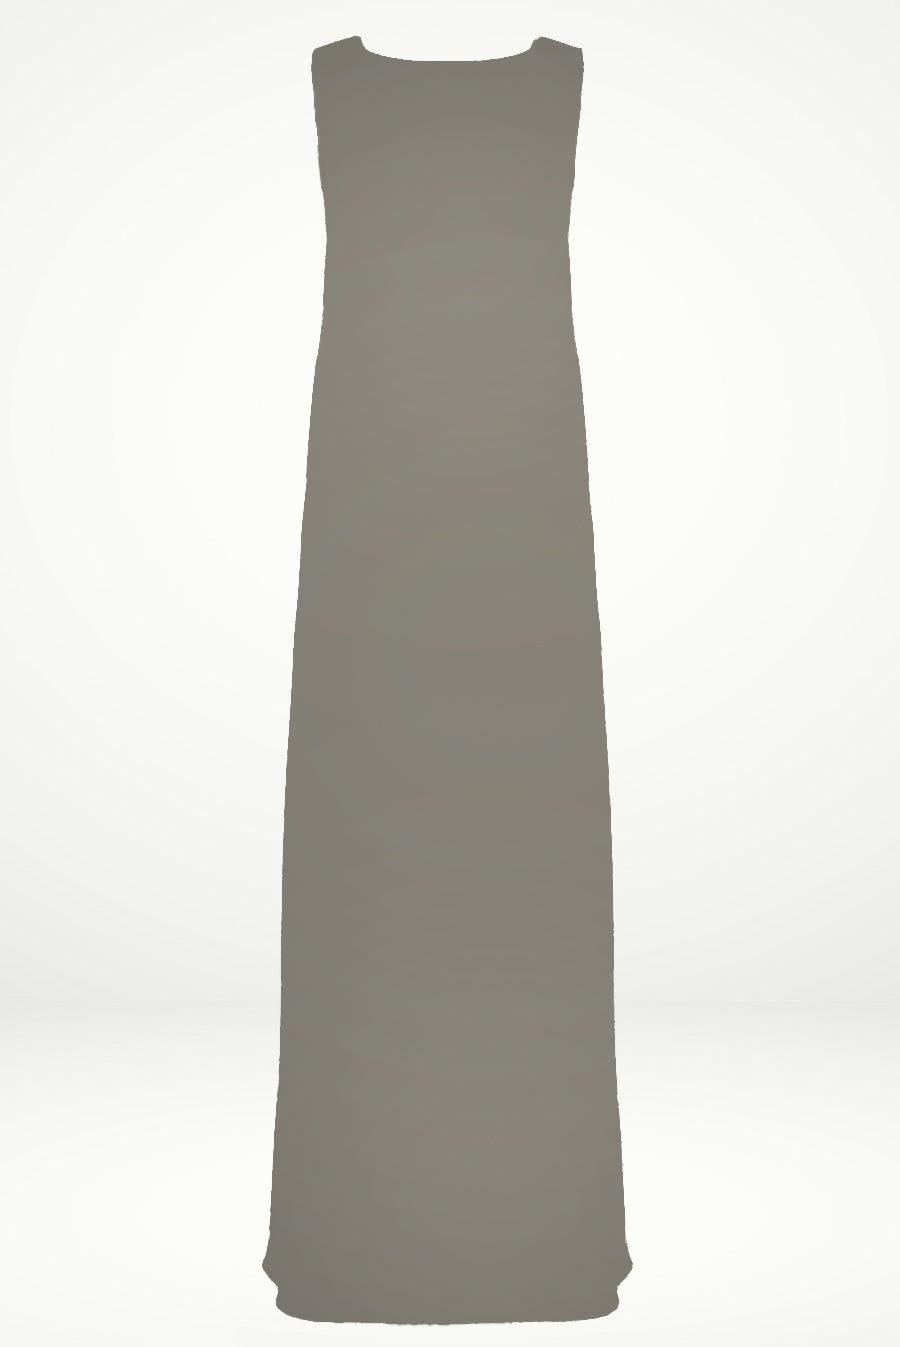 ash grey under abaya dress - thowby - inner slip dress for abayas